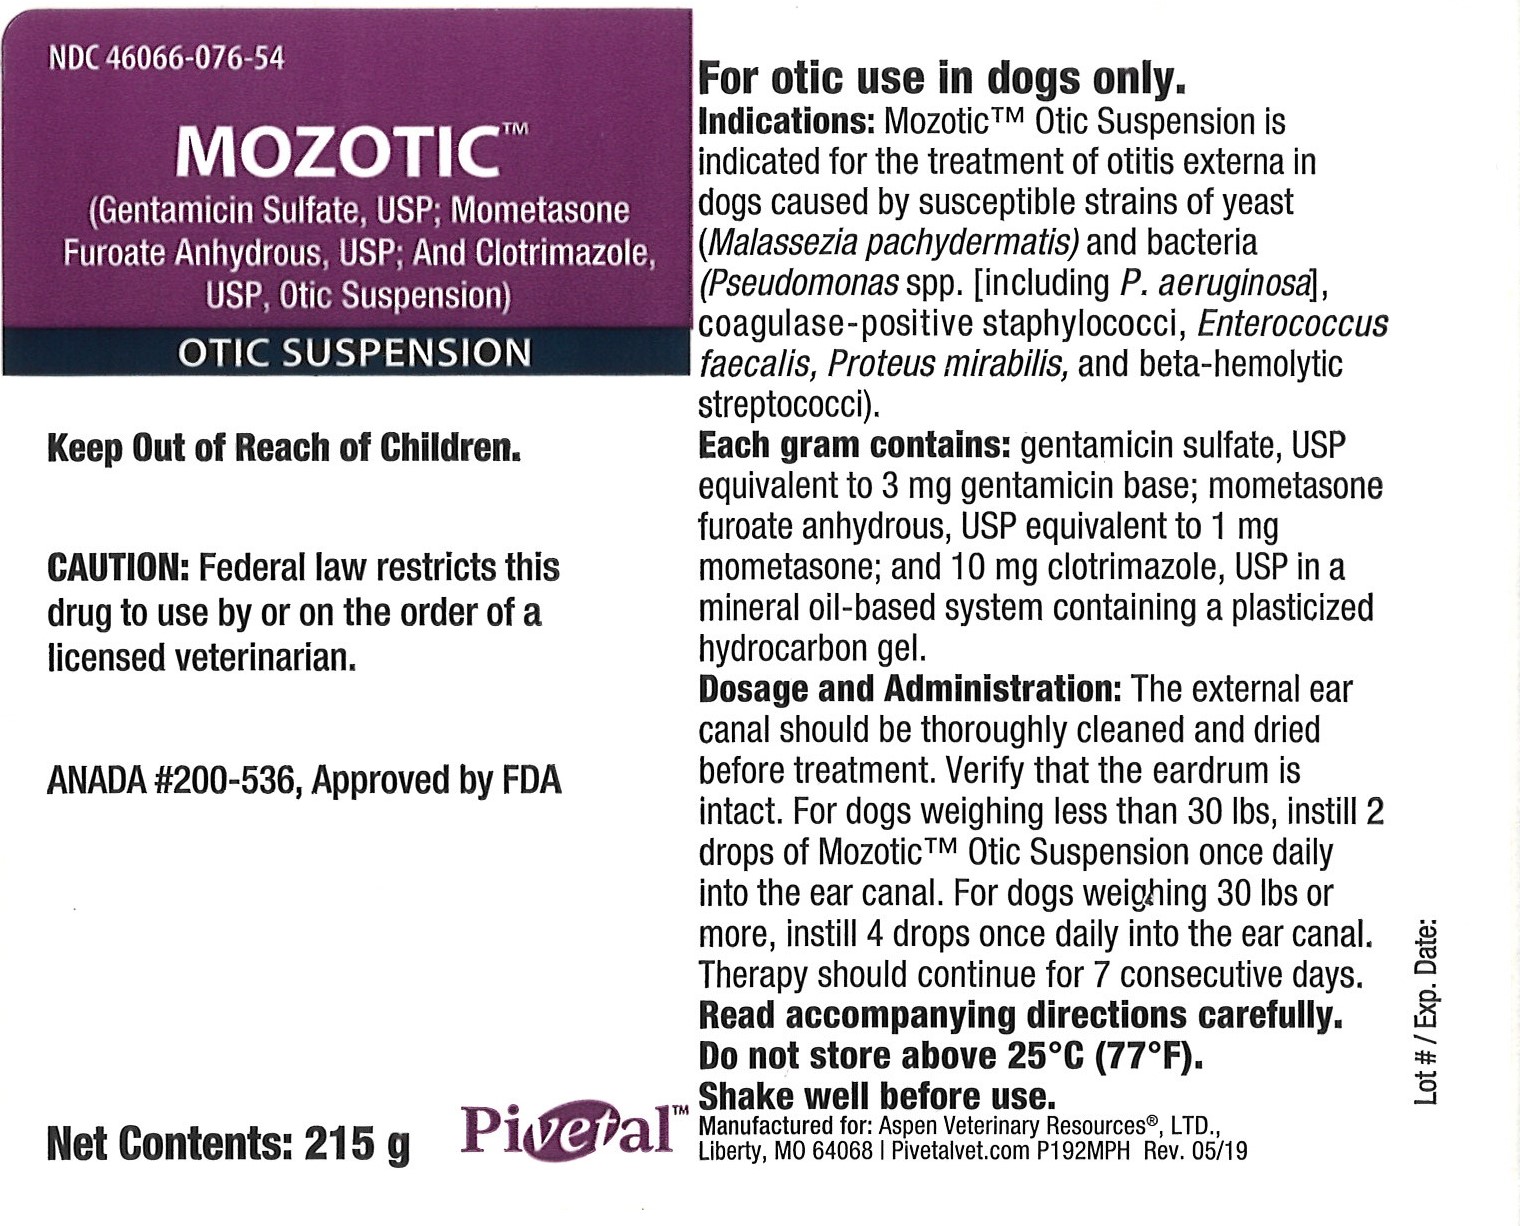 MOZOTIC 215g Bottle Label